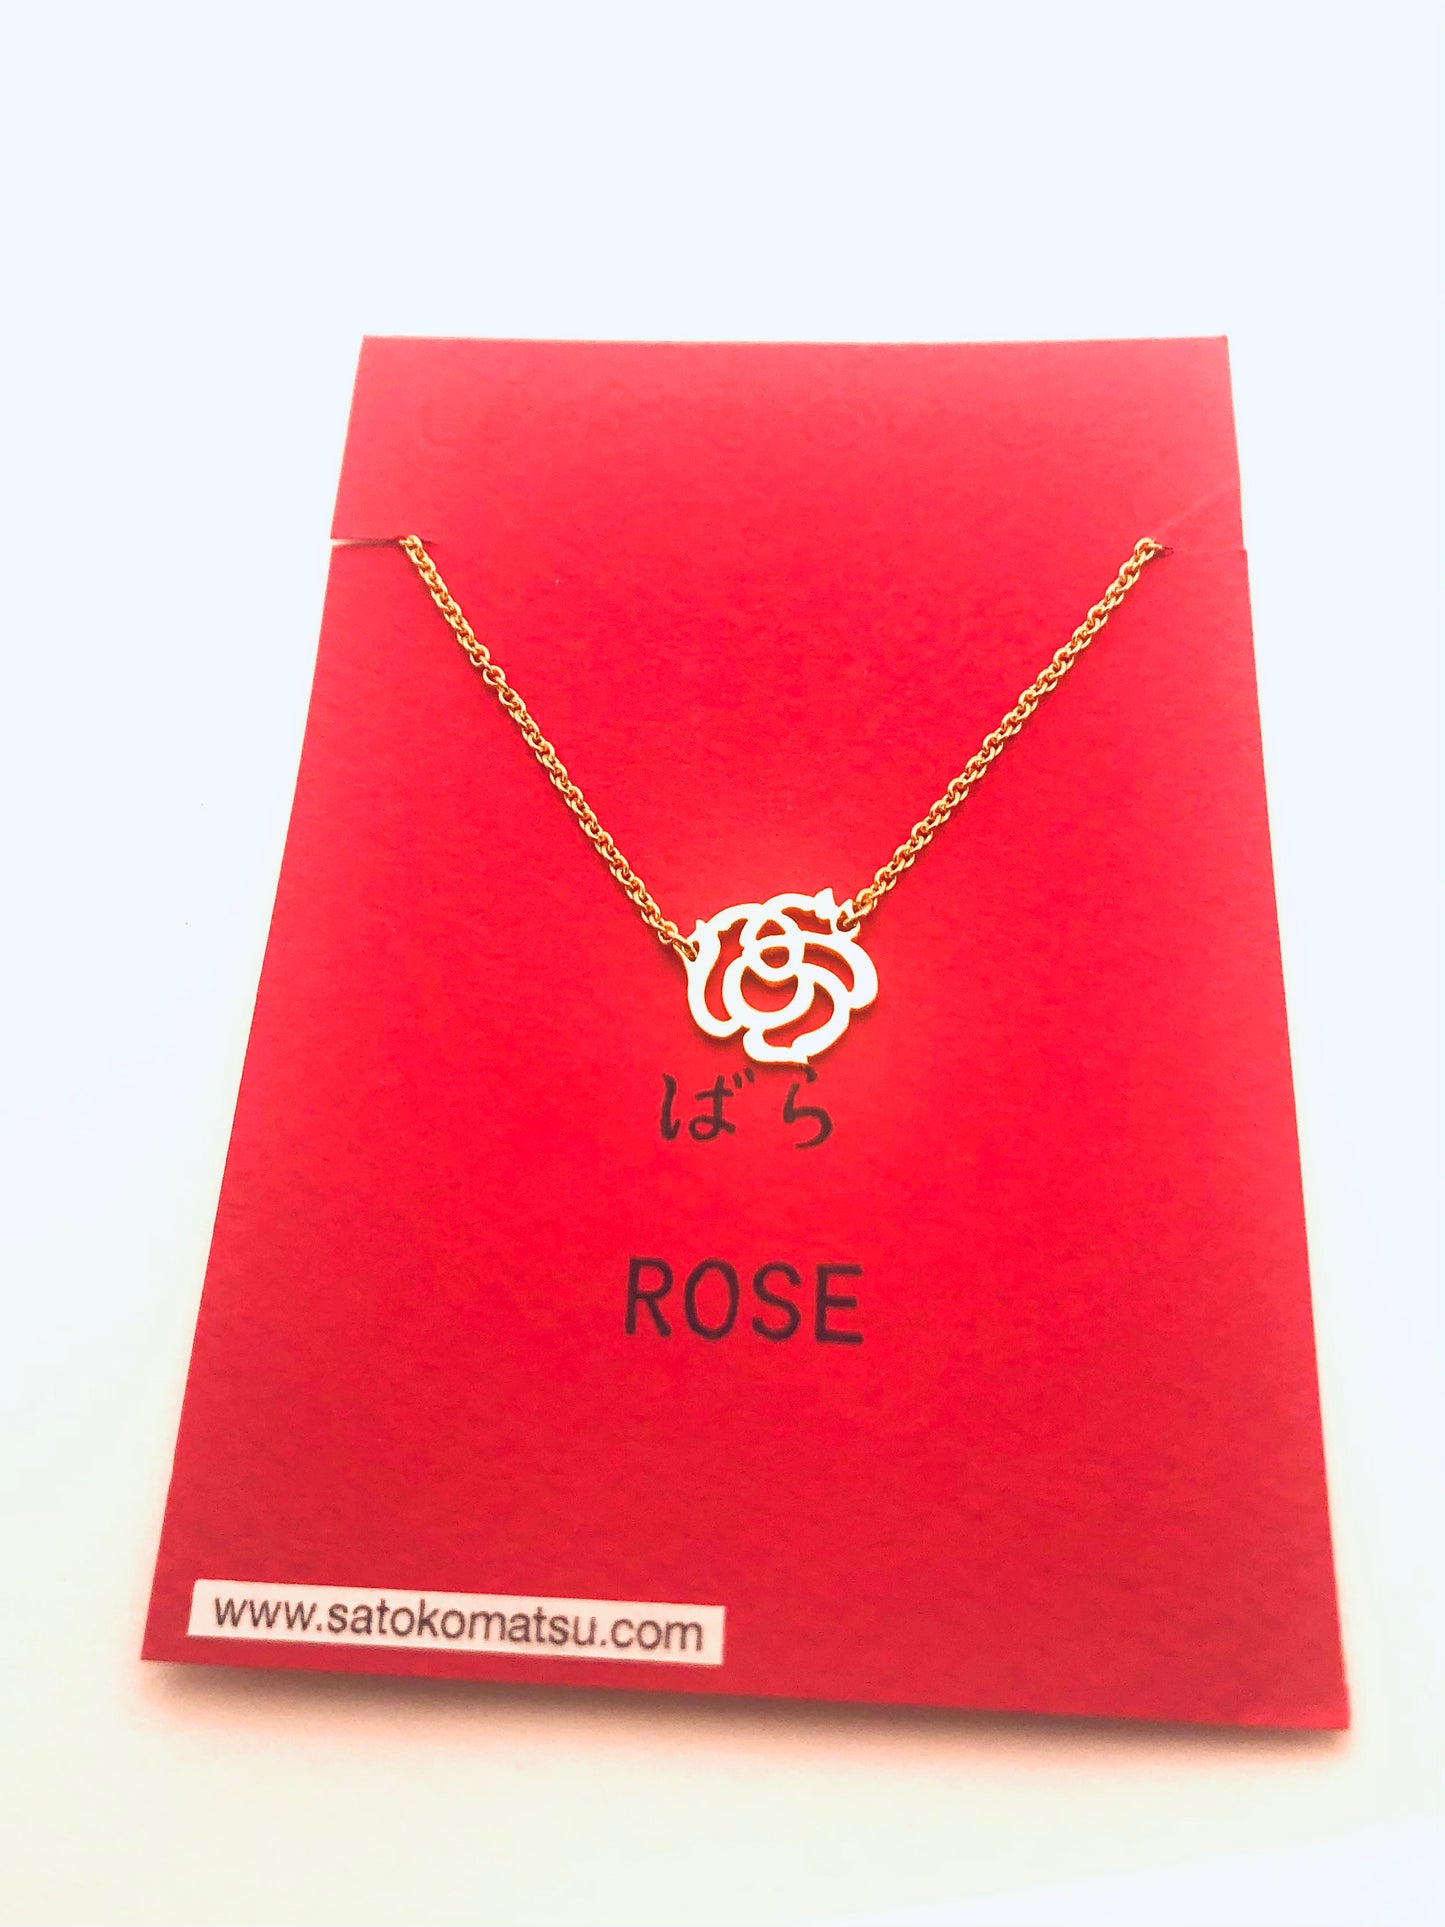 Rose in Hiragana Petit Necklace